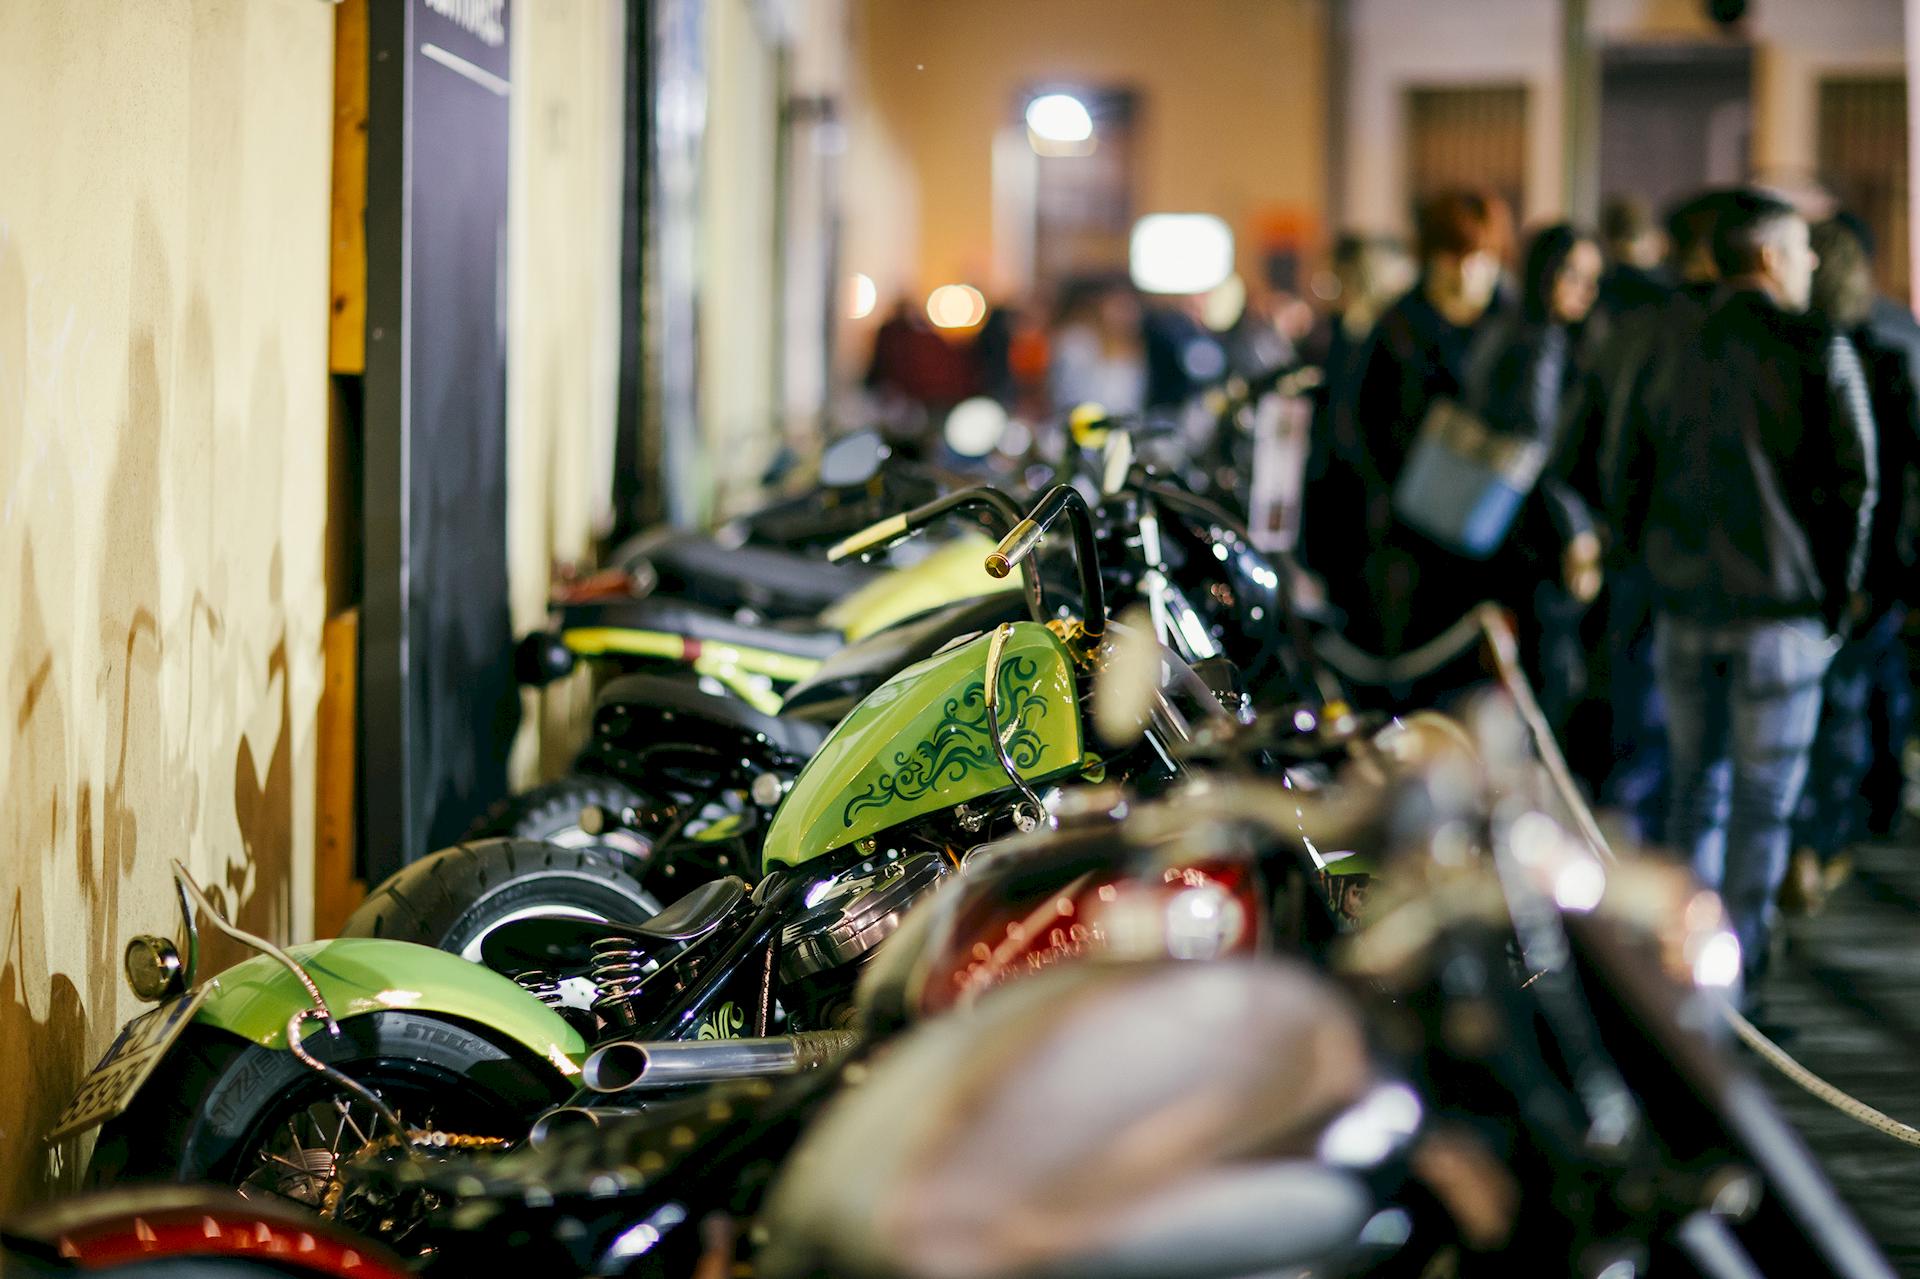 Eternal City Motorcycle Custom Show 2018